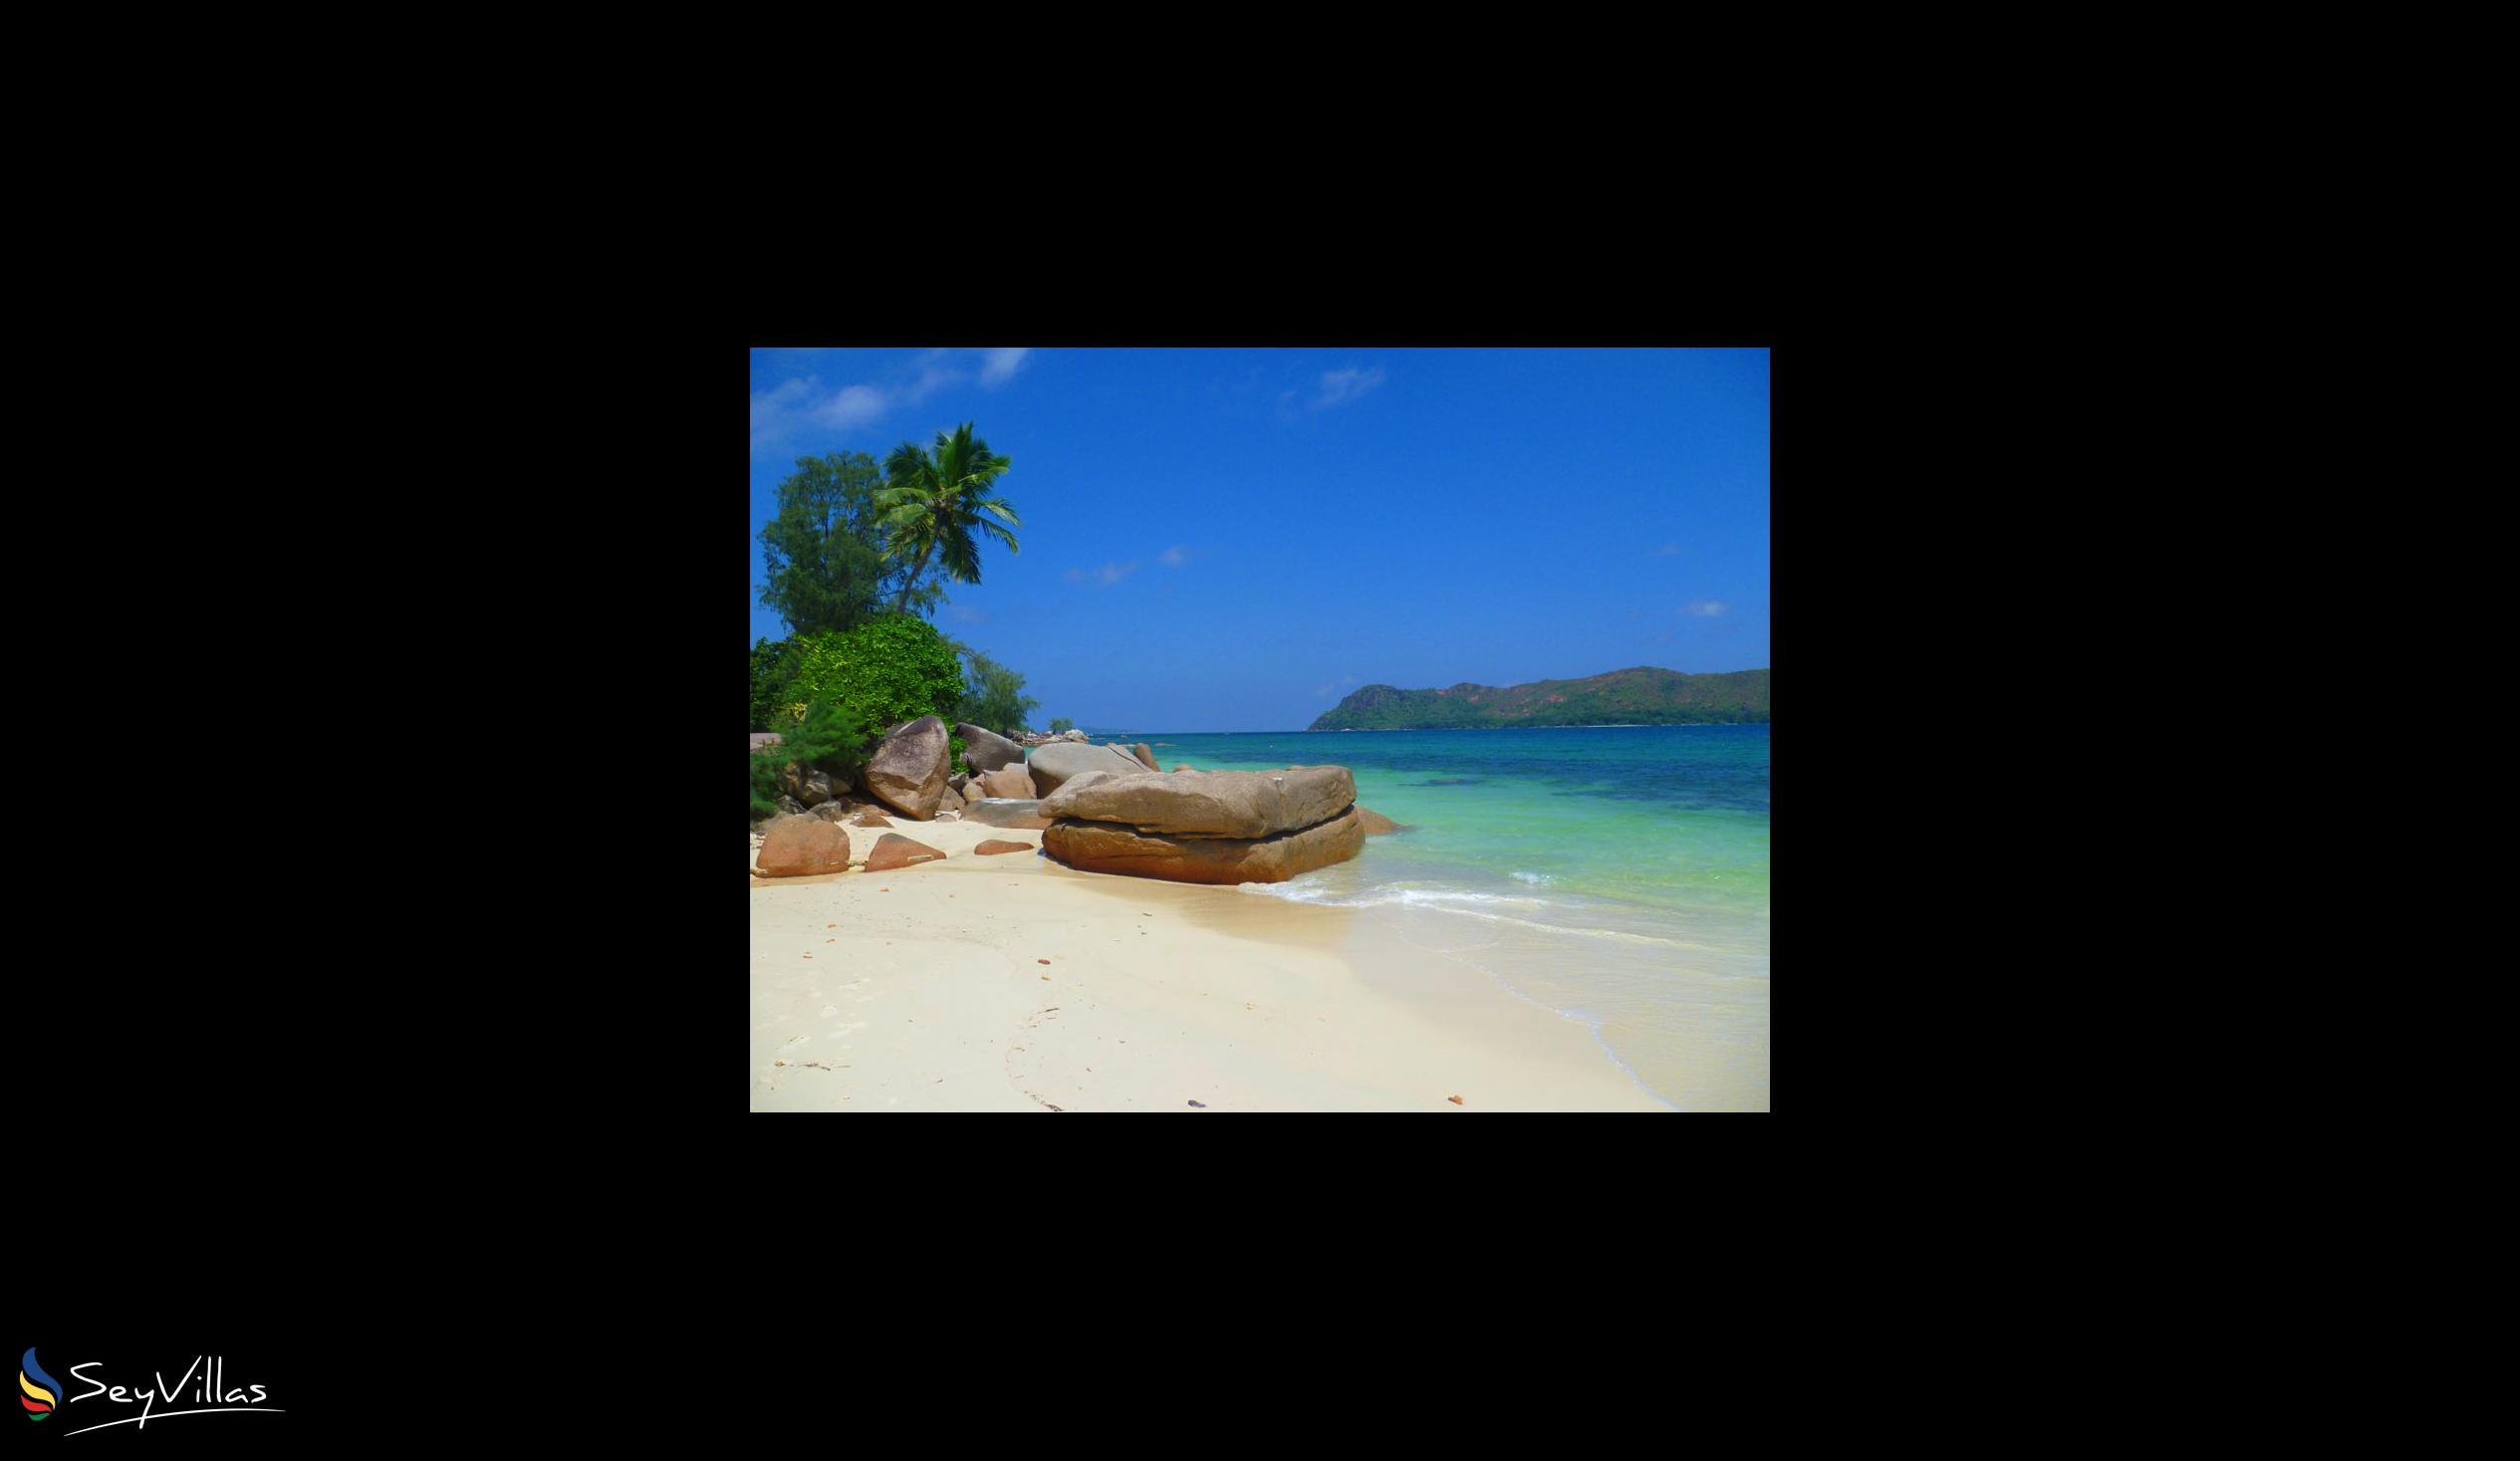 Photo 26: Dream Yacht Praslin Dream - Beaches - Seychelles (Seychelles)